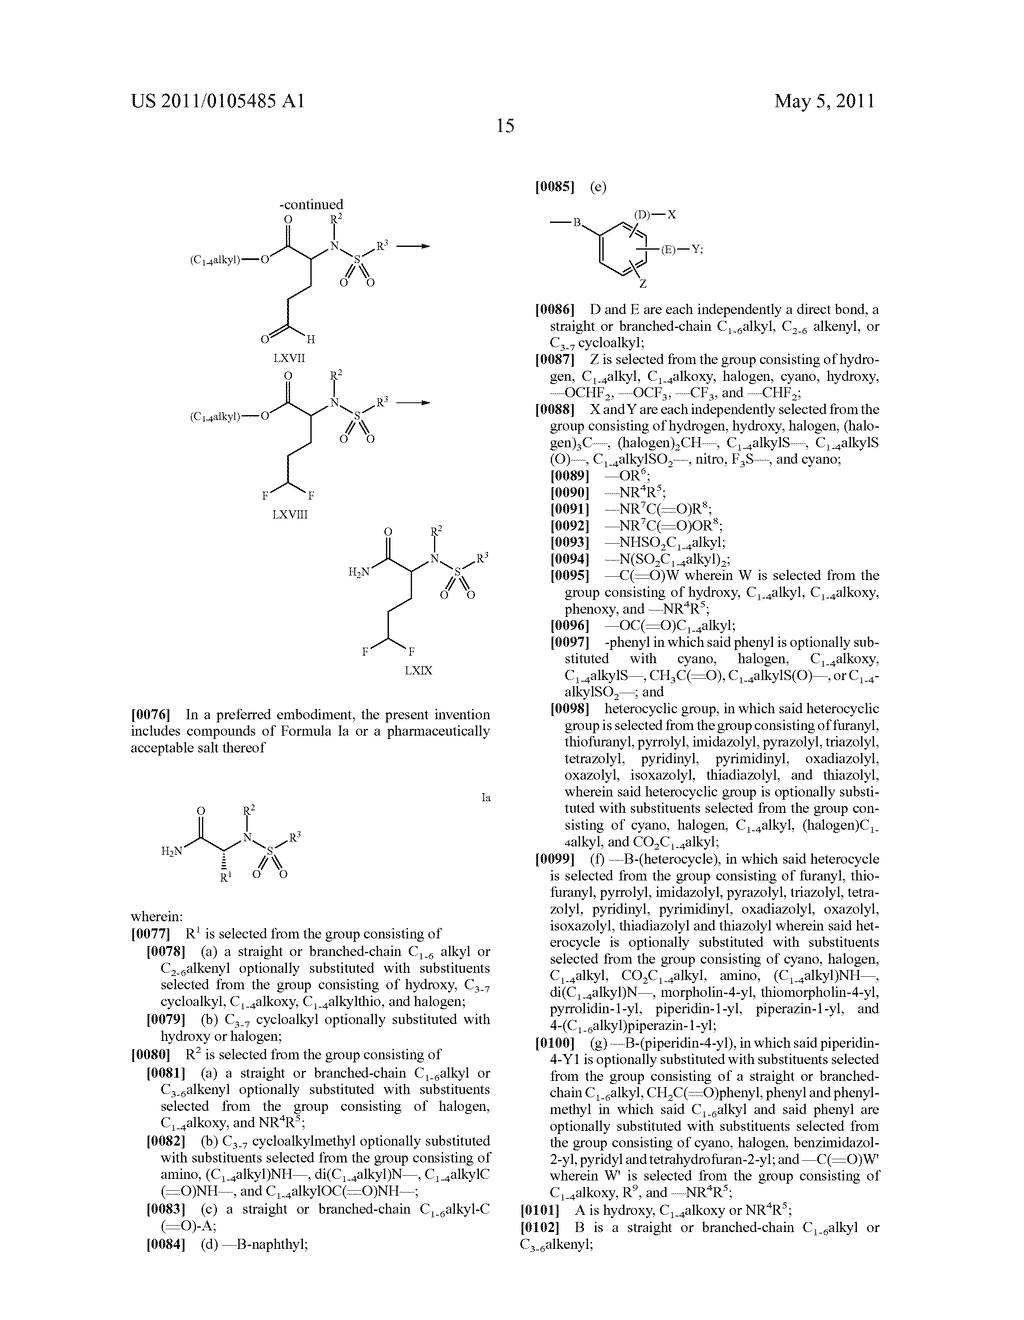 Alpha-(N-Sulfonamido)Acetamide Derivatives as Beta-Amyloid Inhibitors - diagram, schematic, and image 16